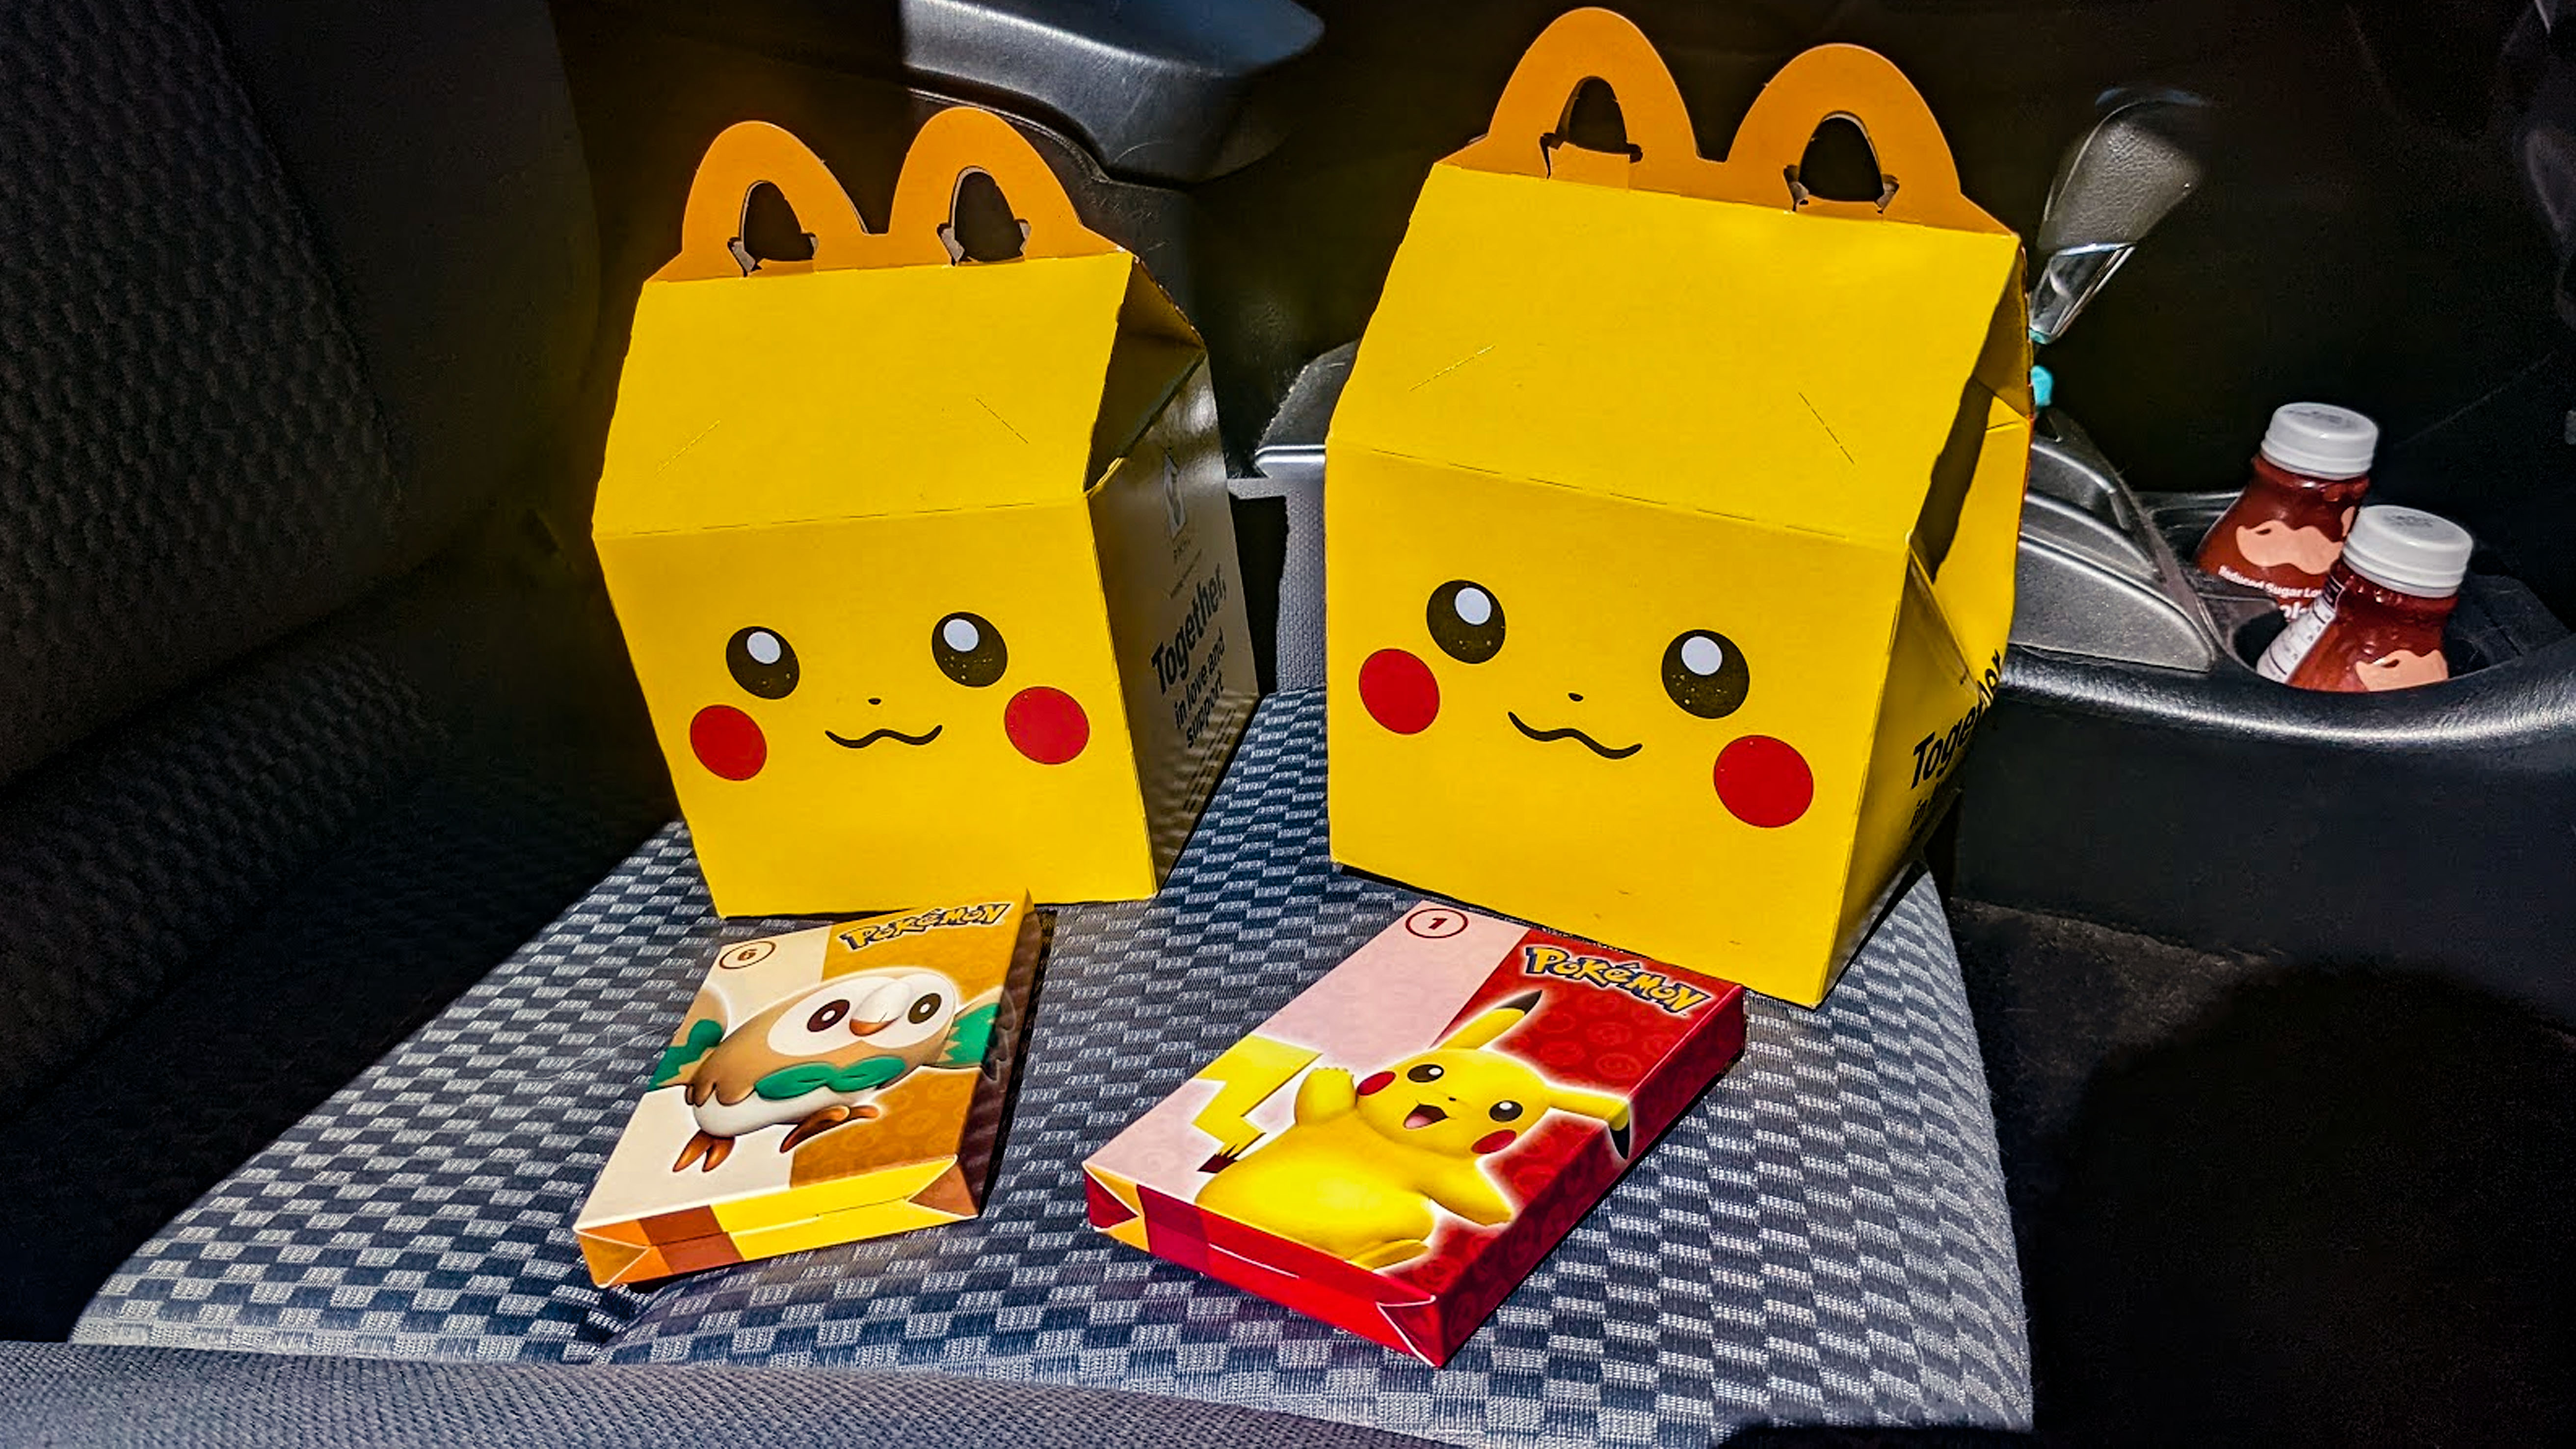 Dehazed image of McDonalds Happy Meals